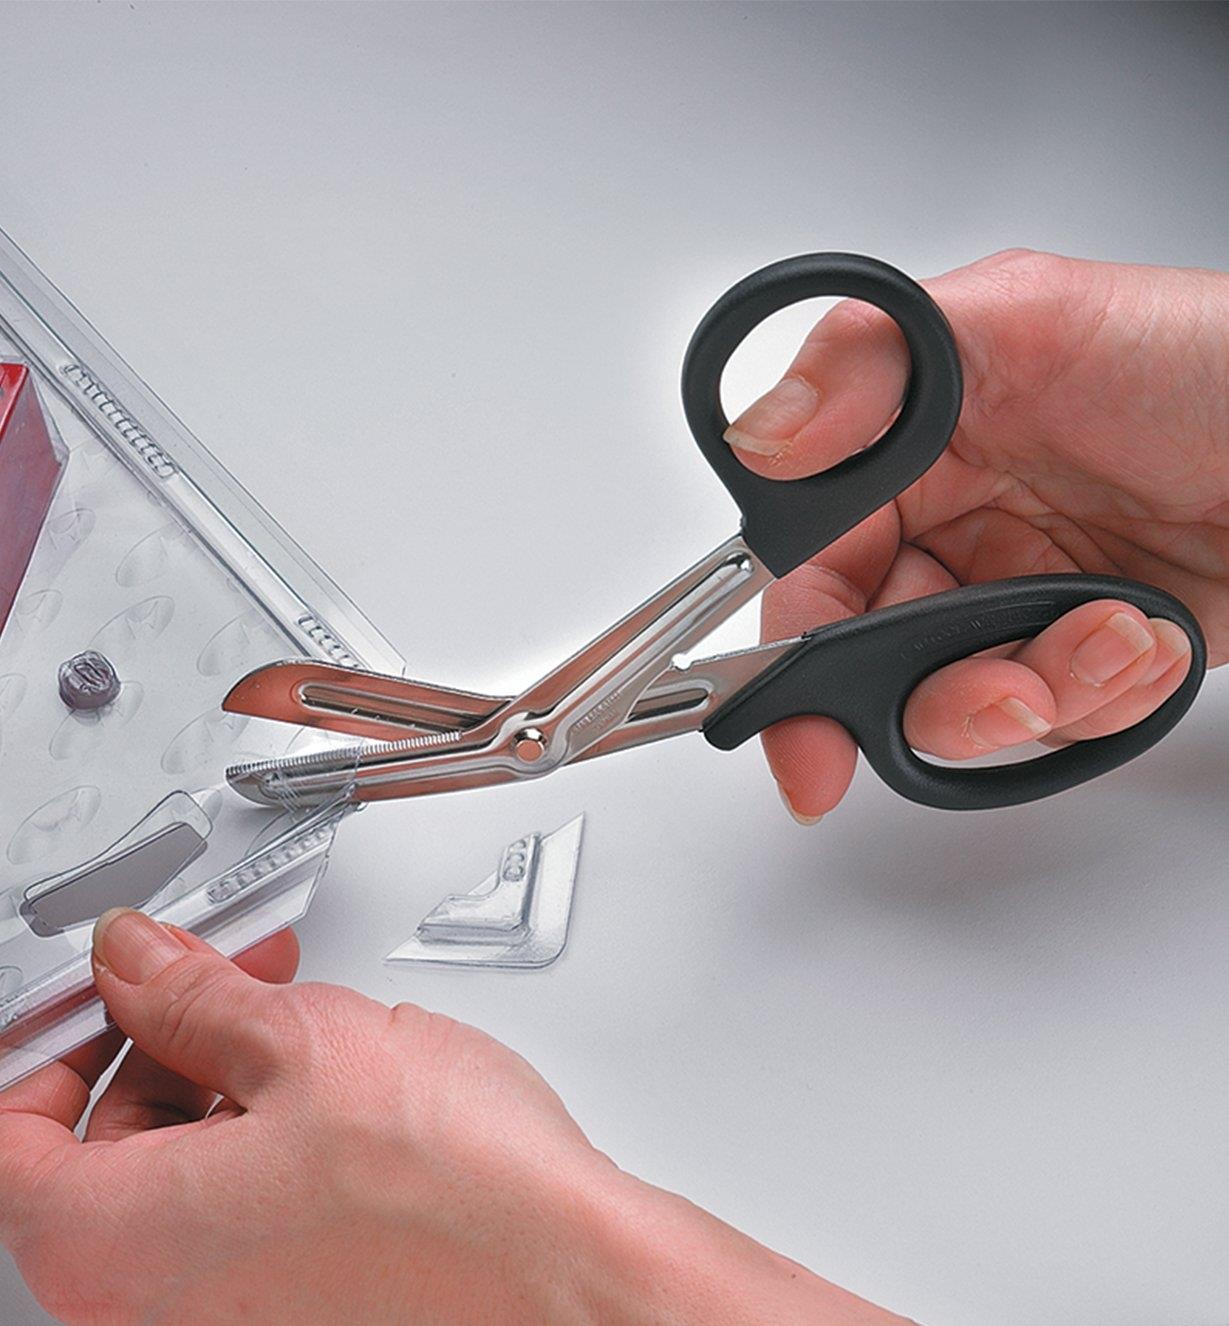 Clamshell Scissors